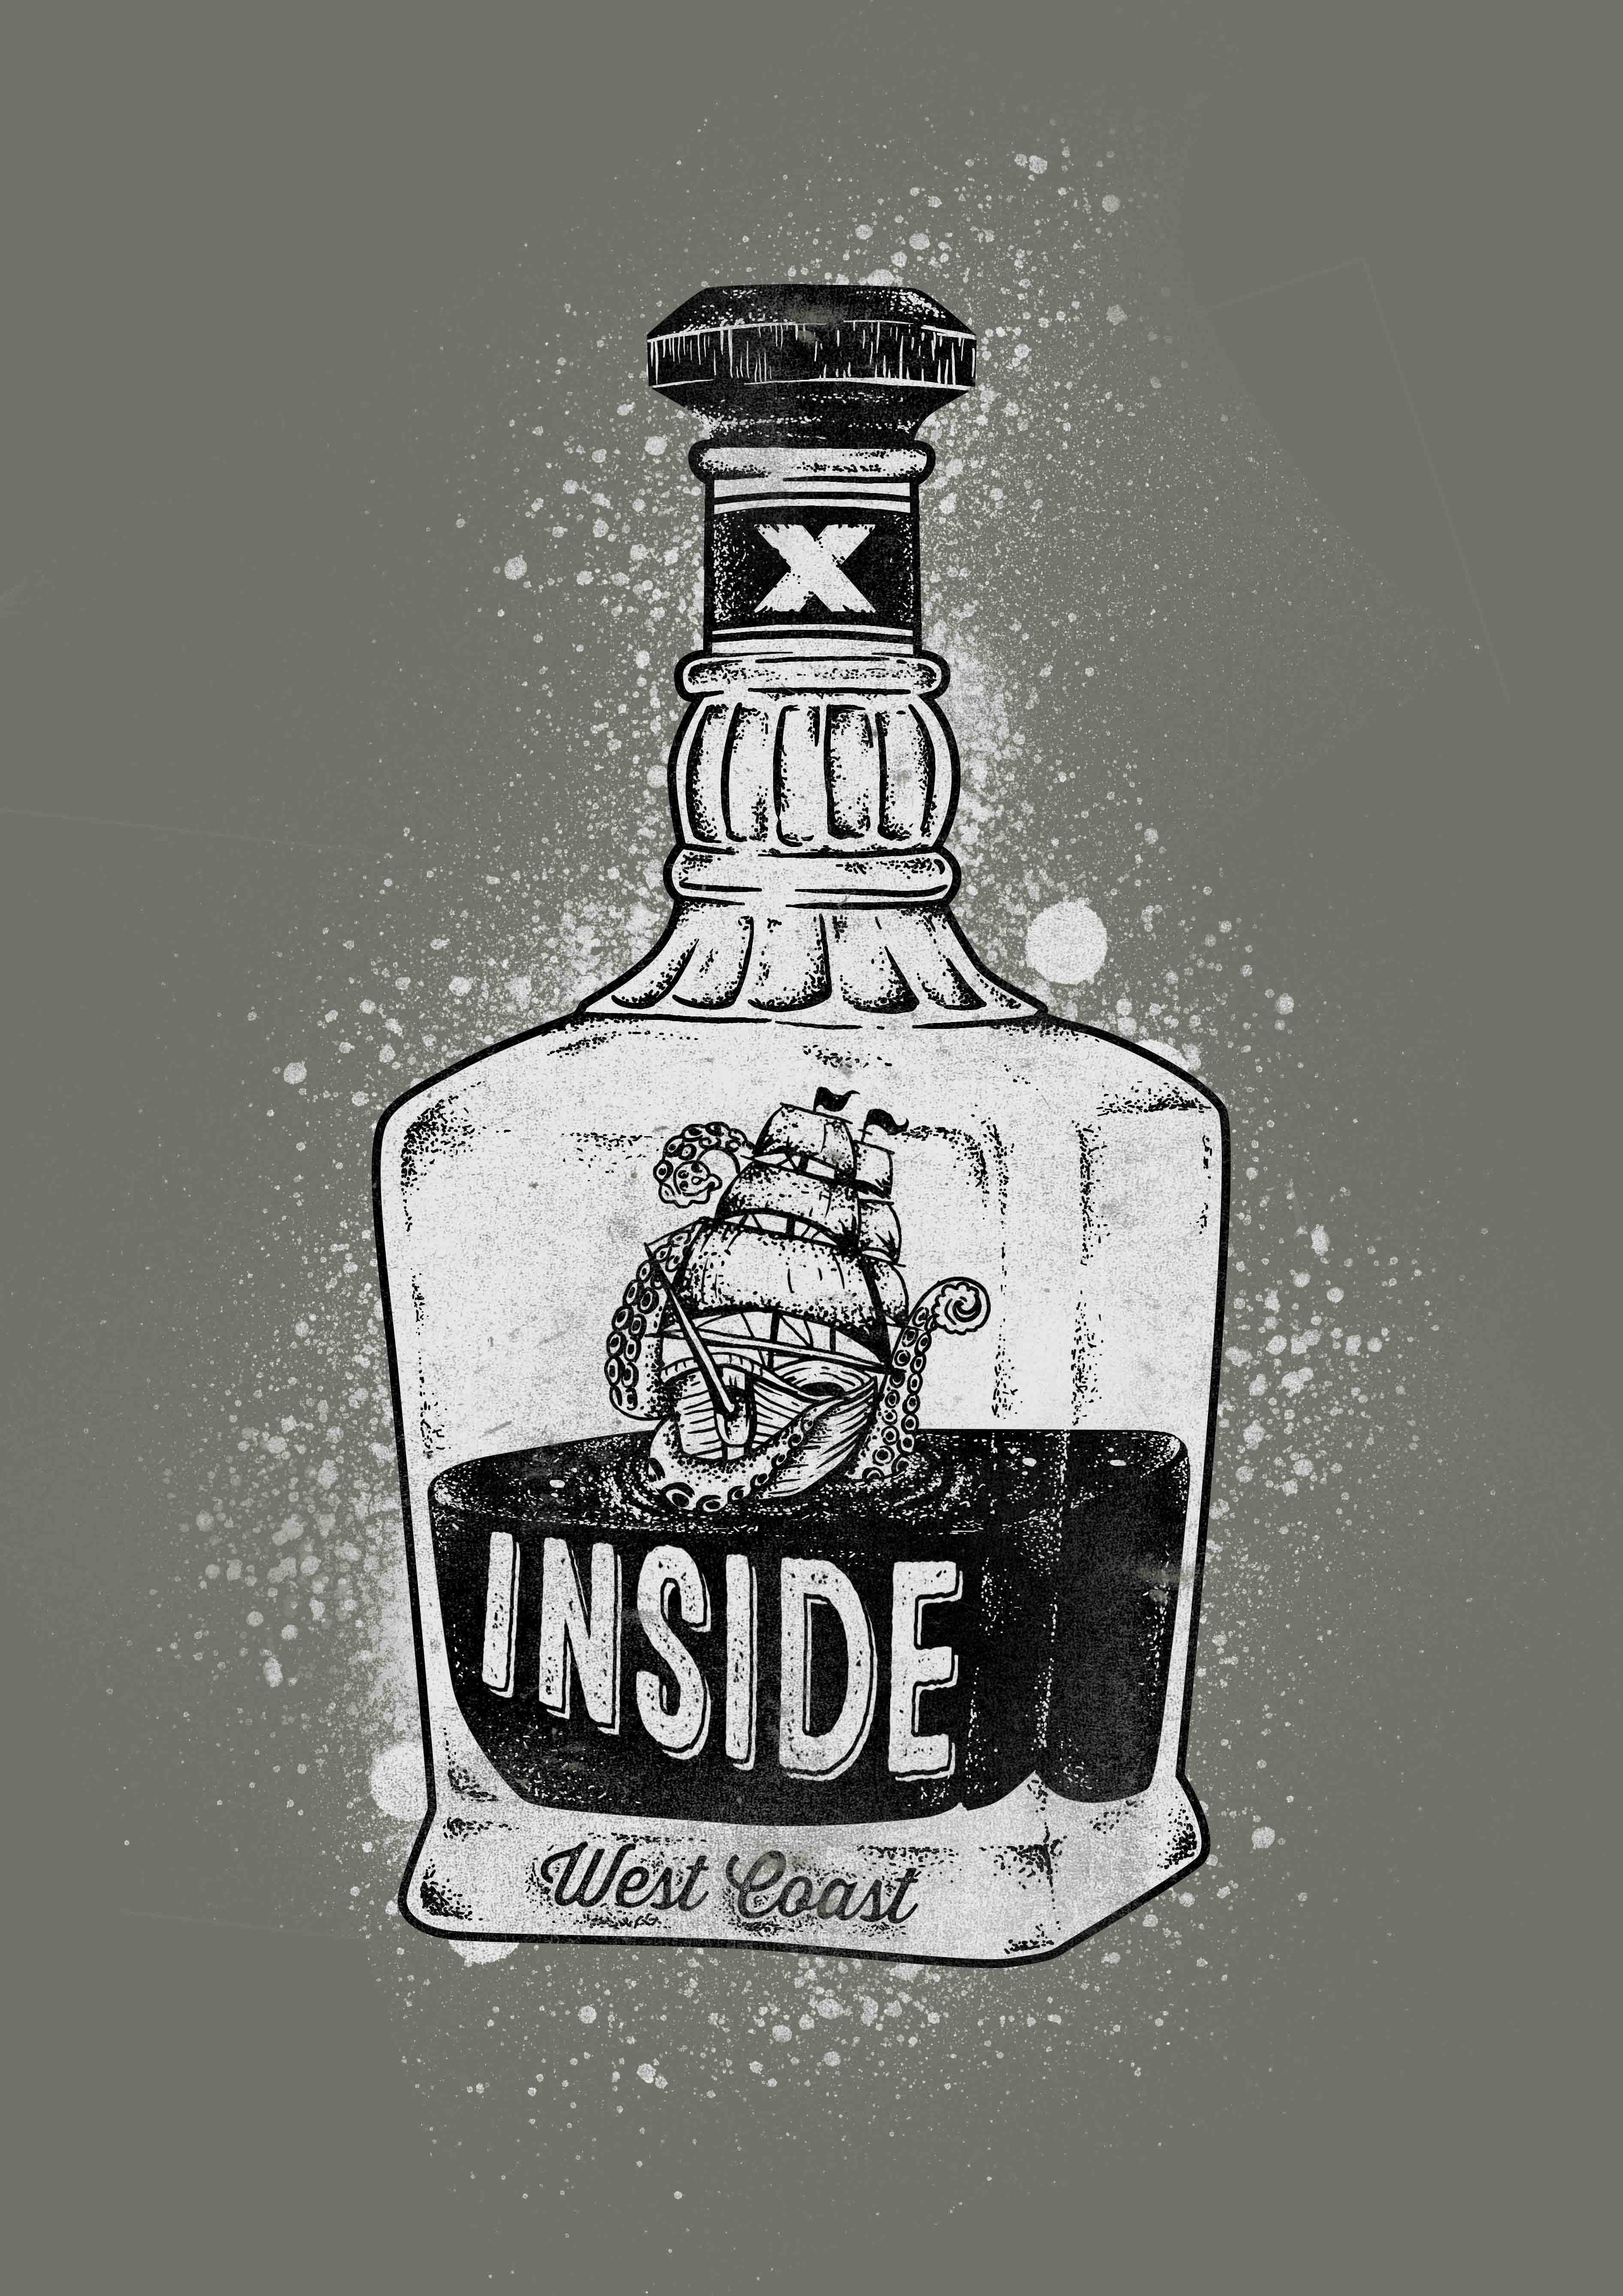 _lowbrow-style-artwork-boat_inside_bottle